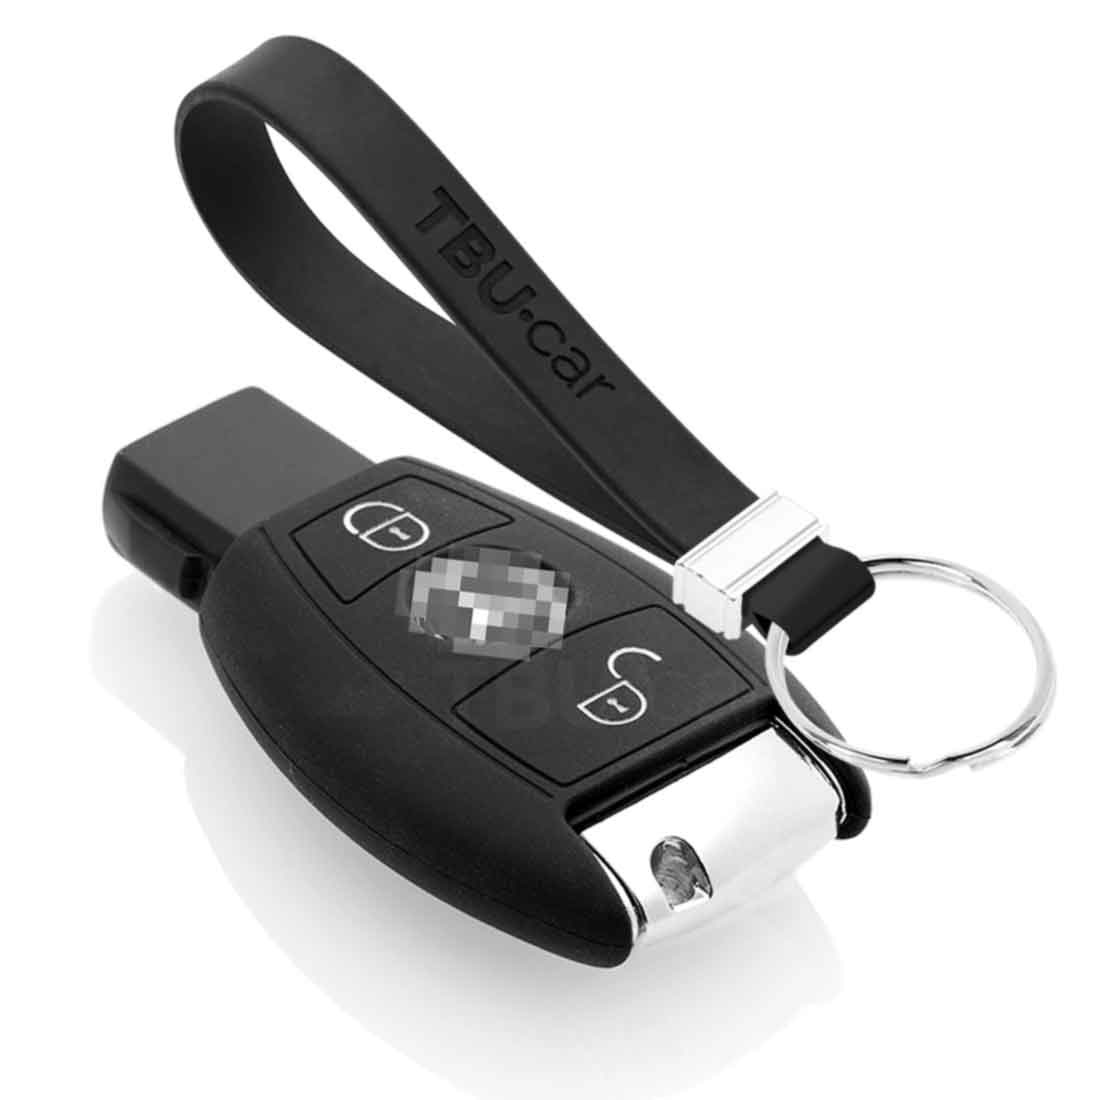 TBU car TBU car Car key cover compatible with Mercedes - Silicone Protective Remote Key Shell - FOB Case Cover - Black